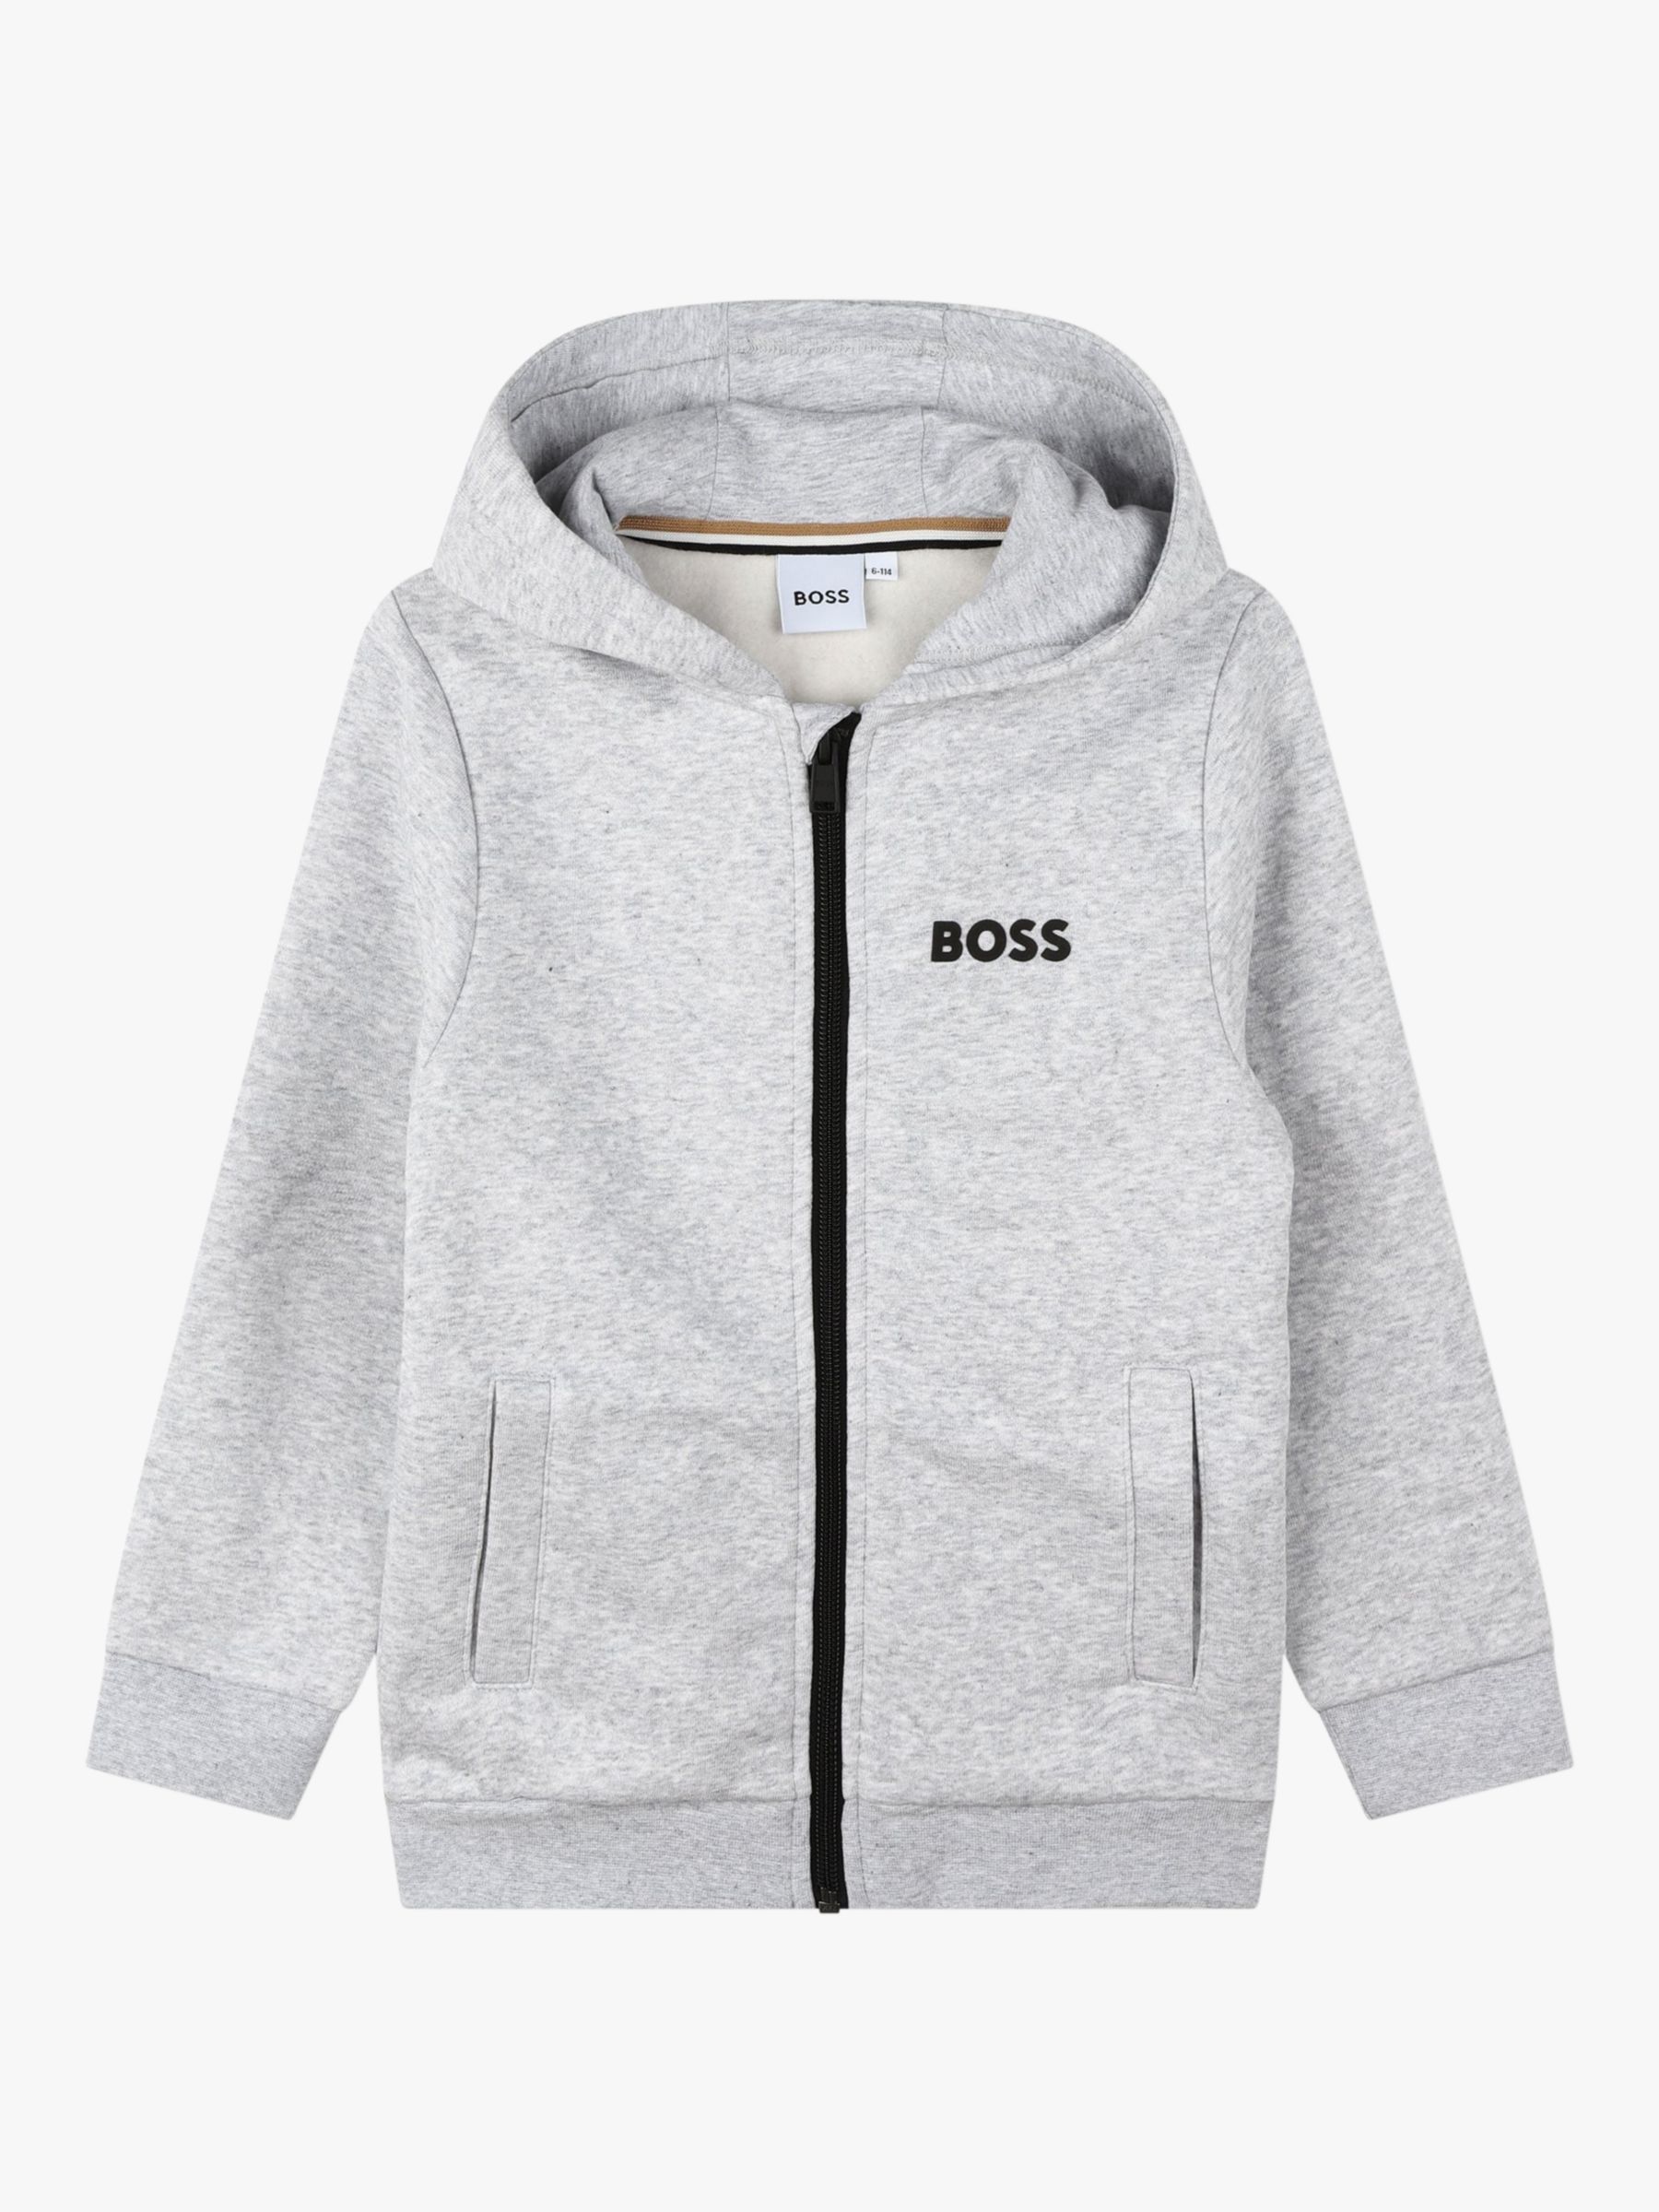 BOSS Kids' Logo Hooded Cardigan, Light Grey, 5 years